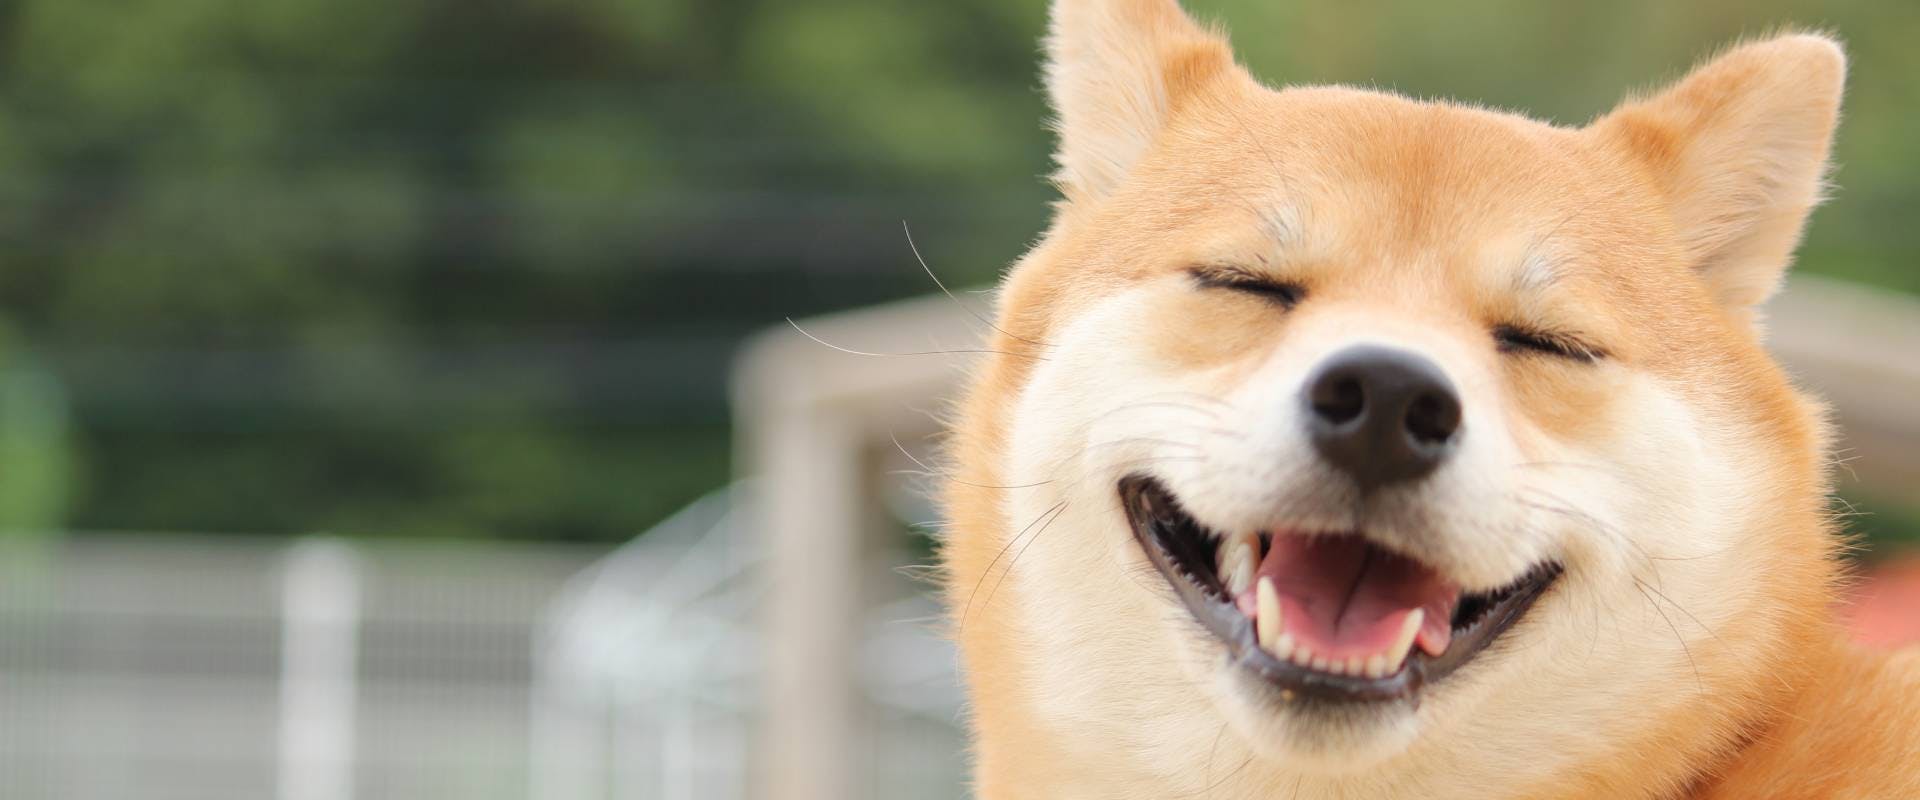 A very smiley doggo.